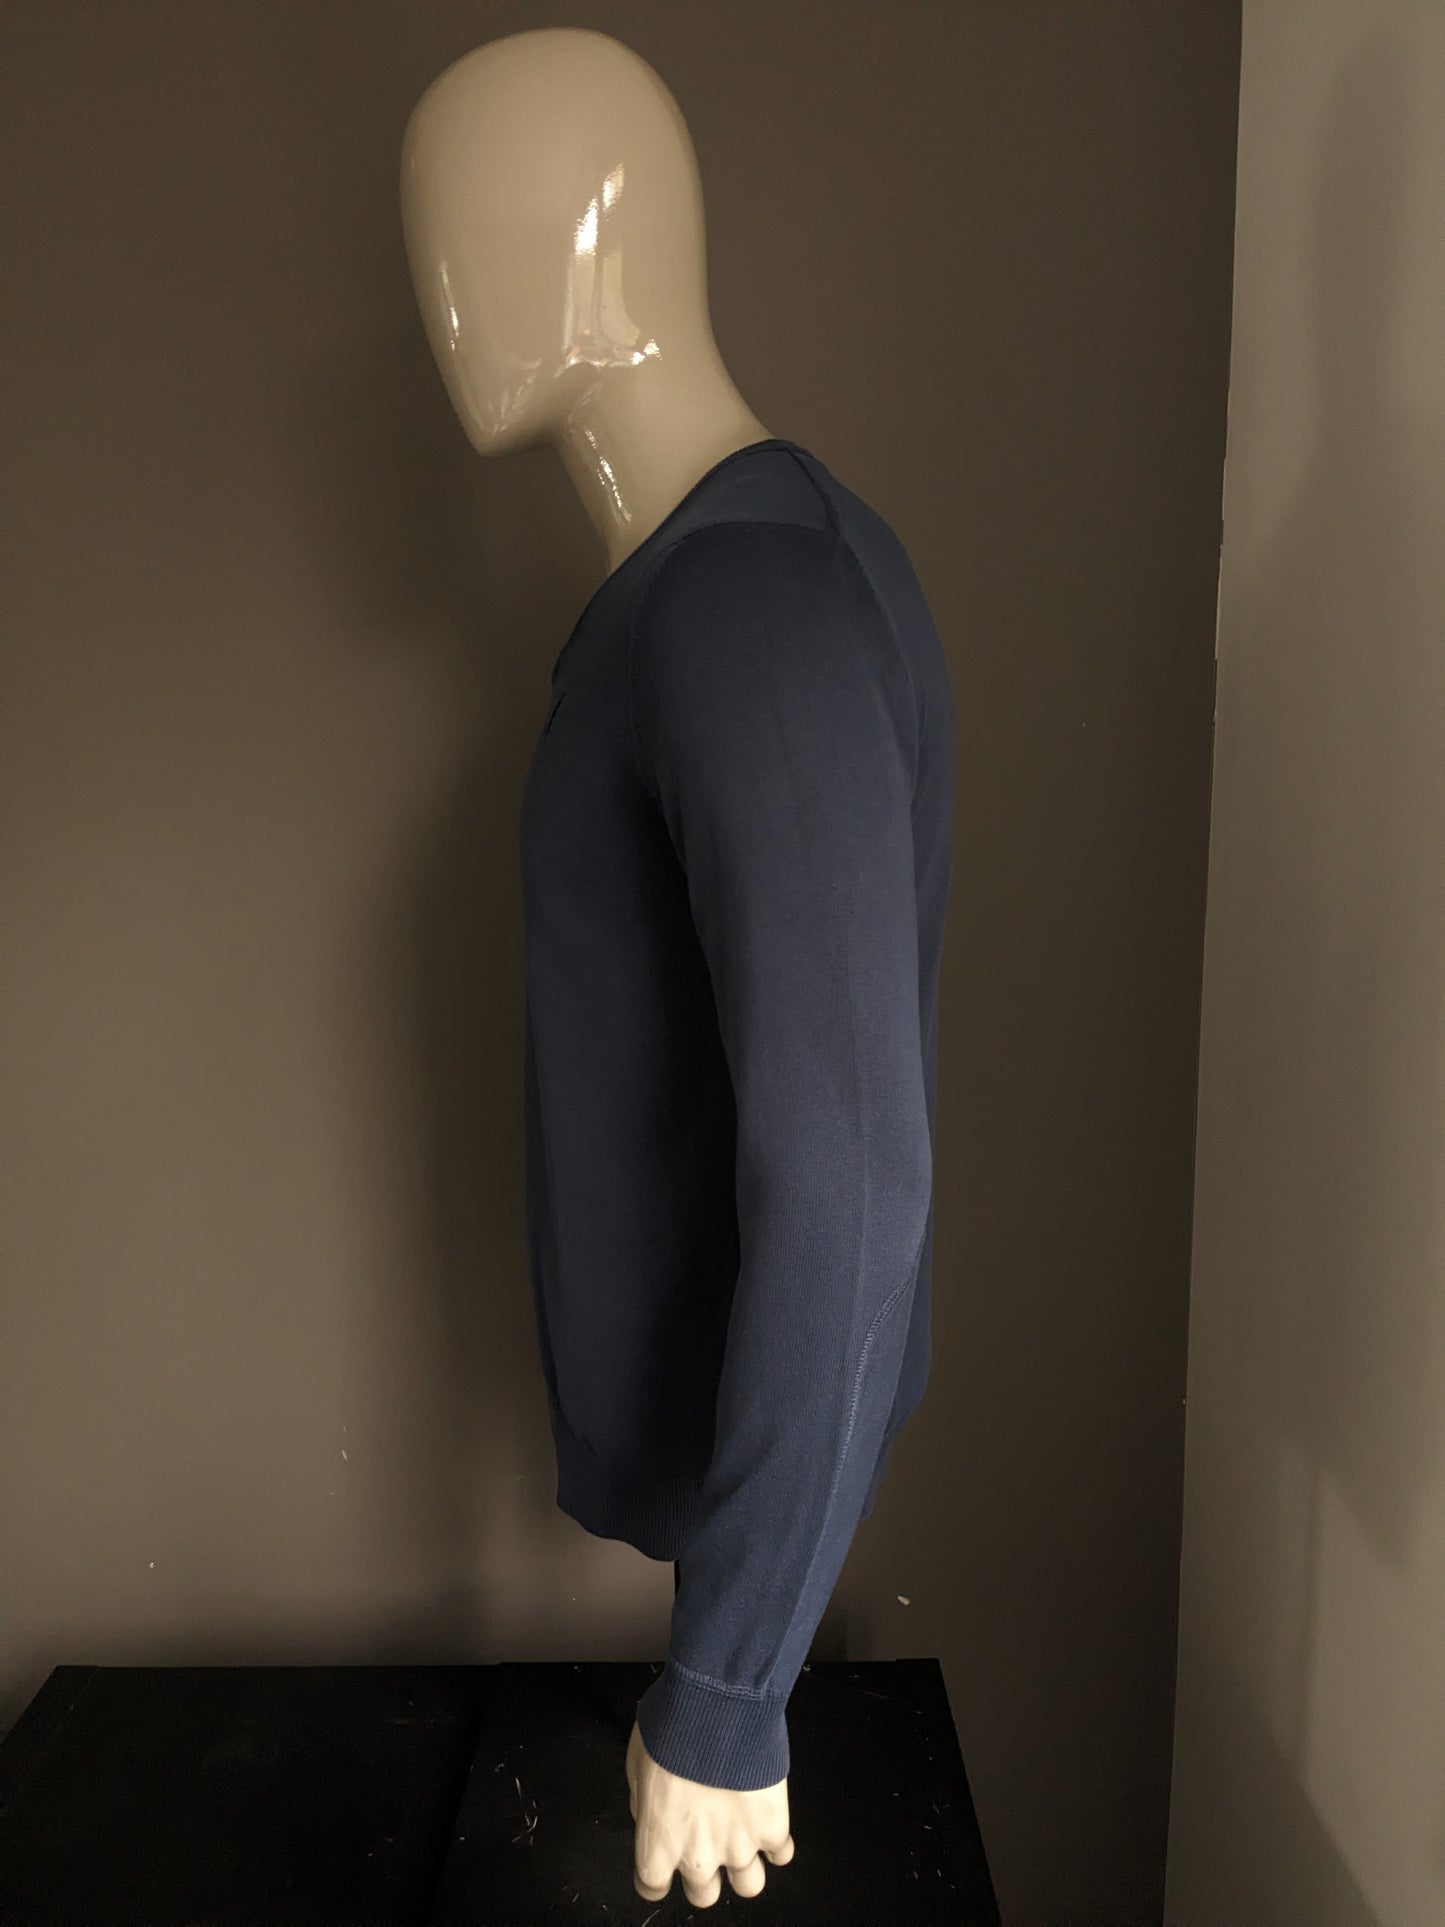 Sétidor de algodón Cavallaro con cuello en V. Color azul oscuro. Tamaño S.